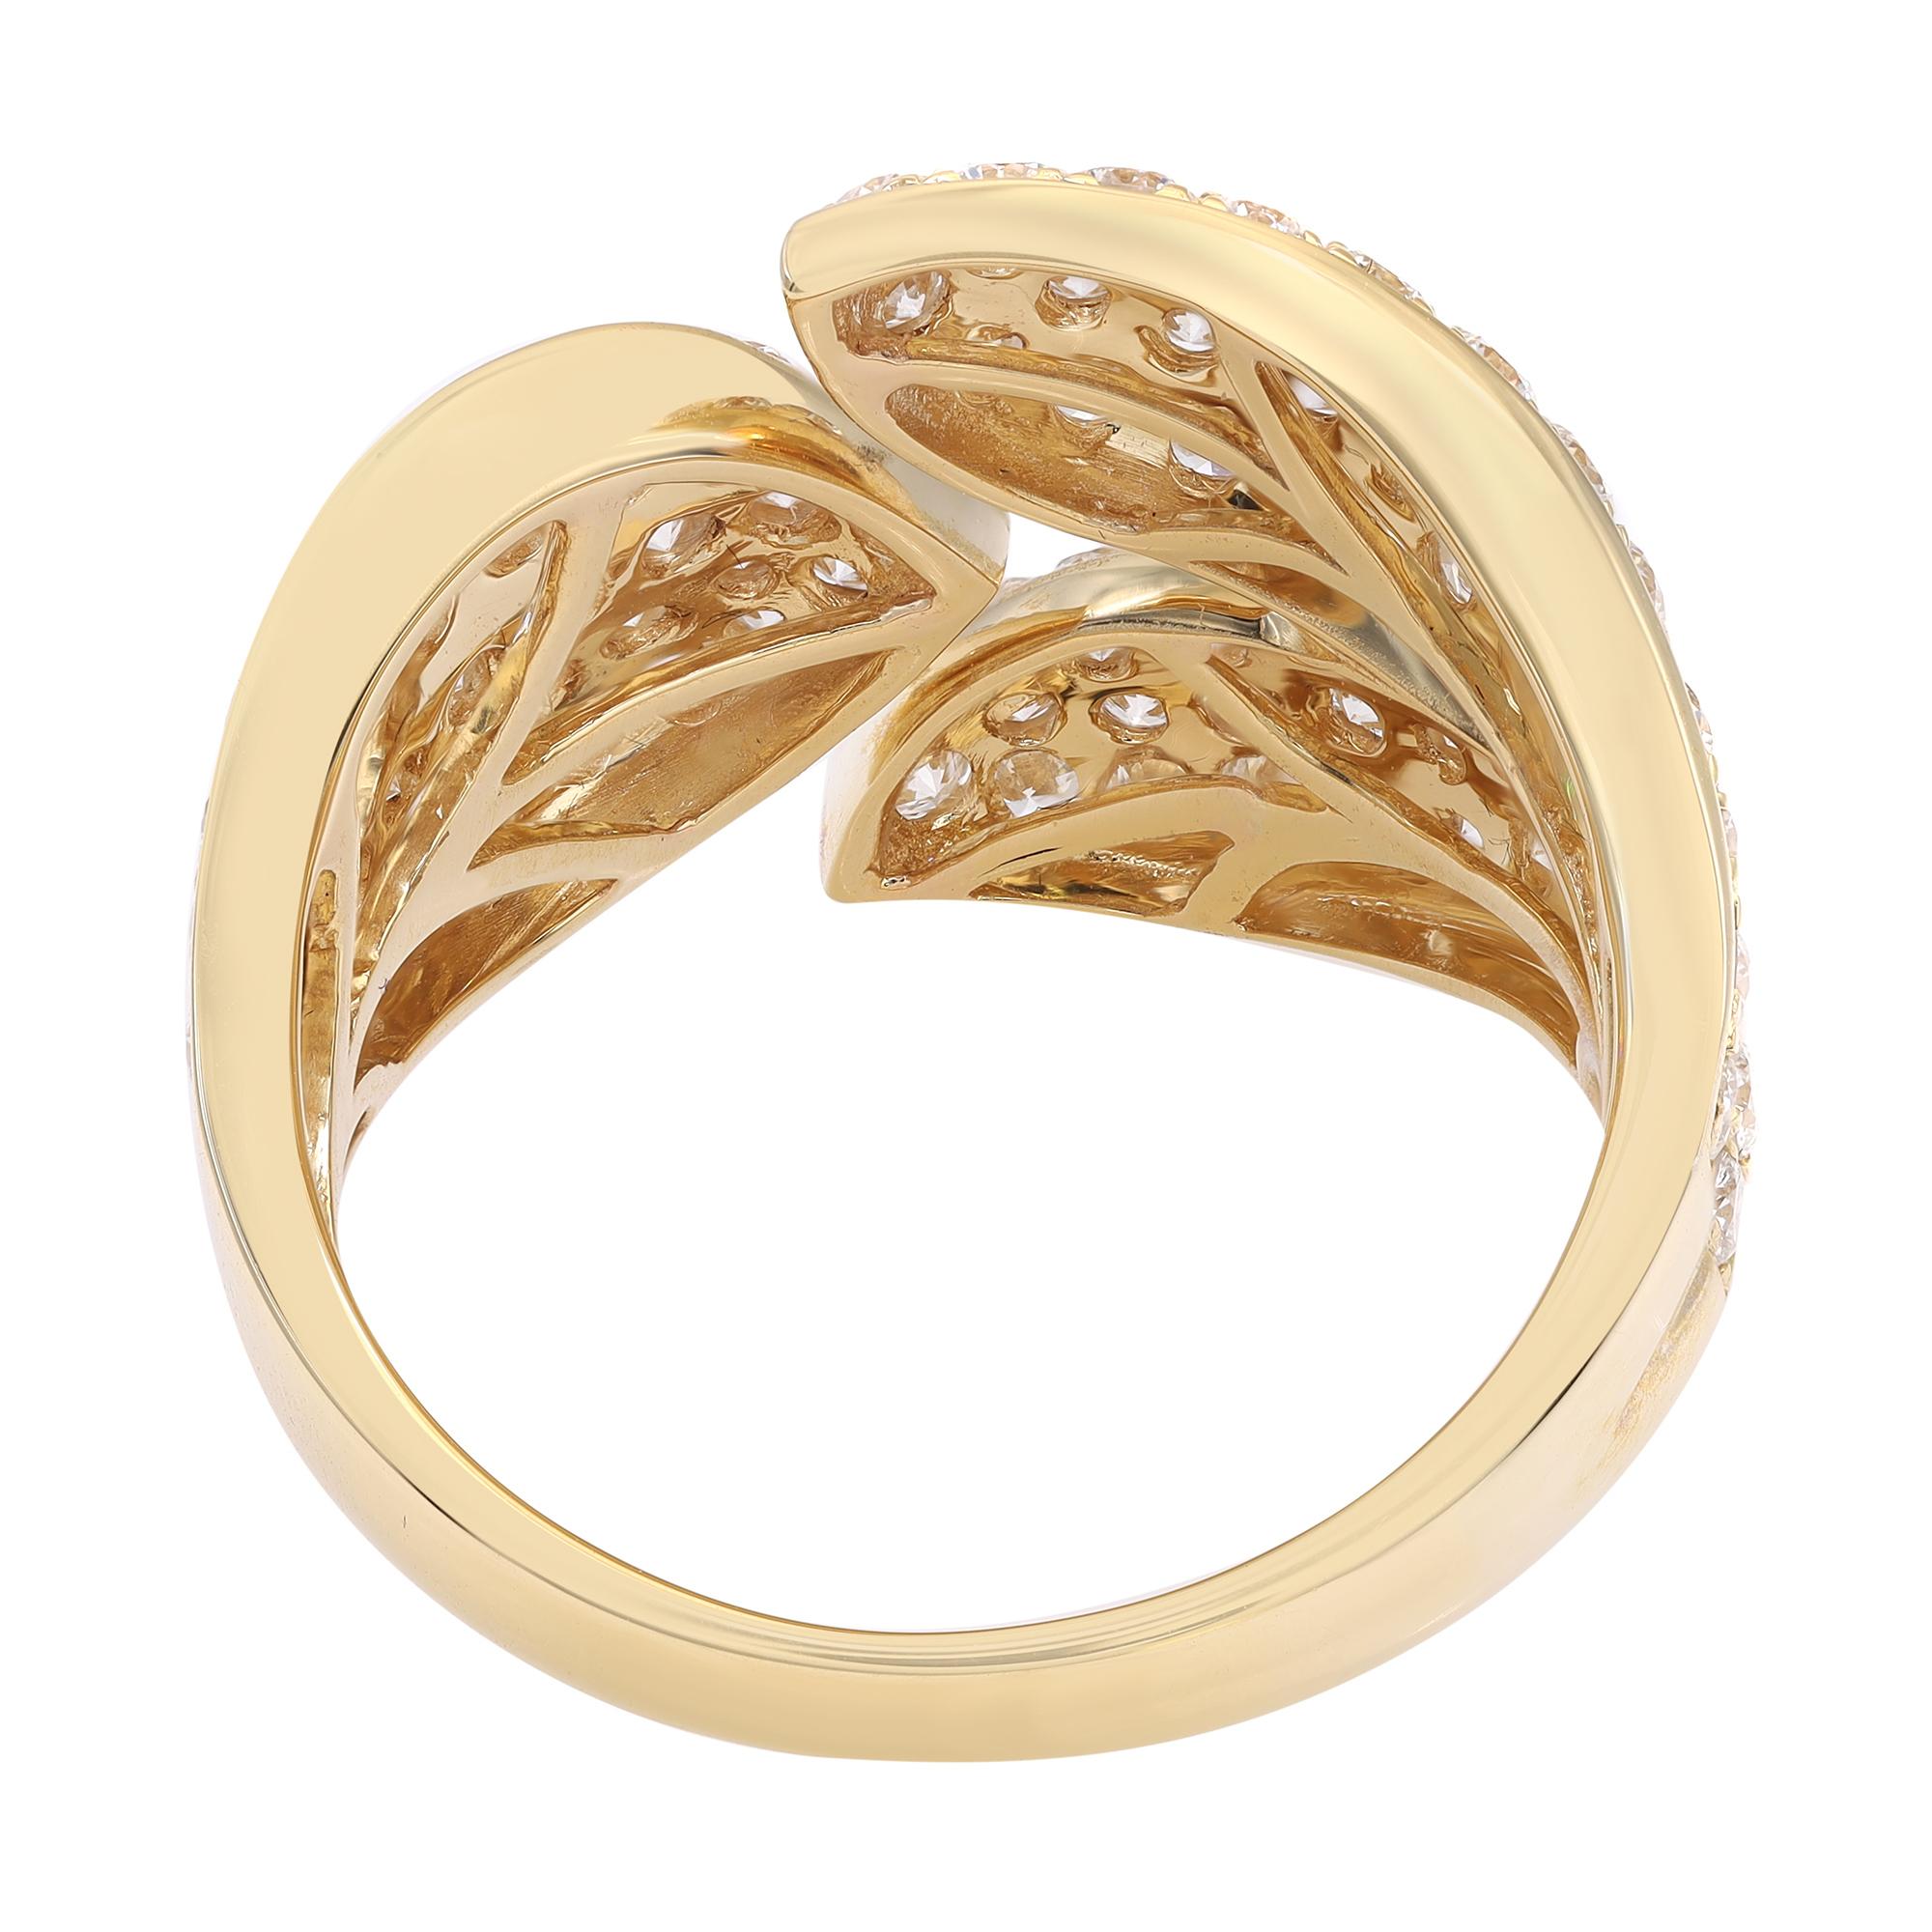 Modern Rachel Koen Pave Set Round Cut Diamond Ring 18K Yellow Gold 2.00Cttw For Sale